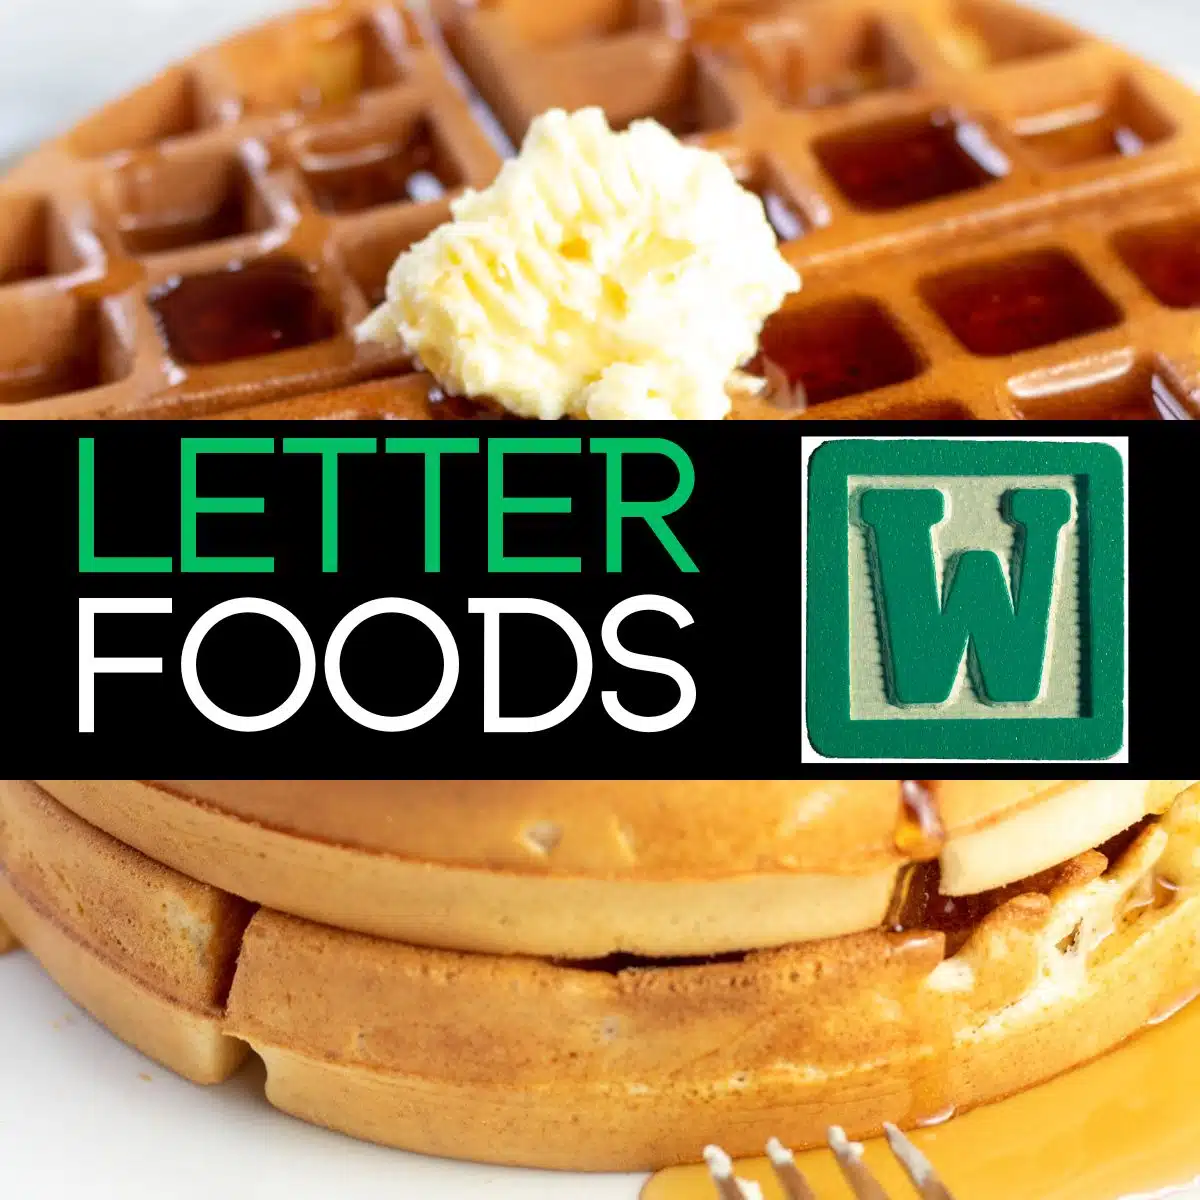 Gambar persegi dengan teks untuk makanan yang dimulai dengan huruf w, menampilkan wafel di foto.